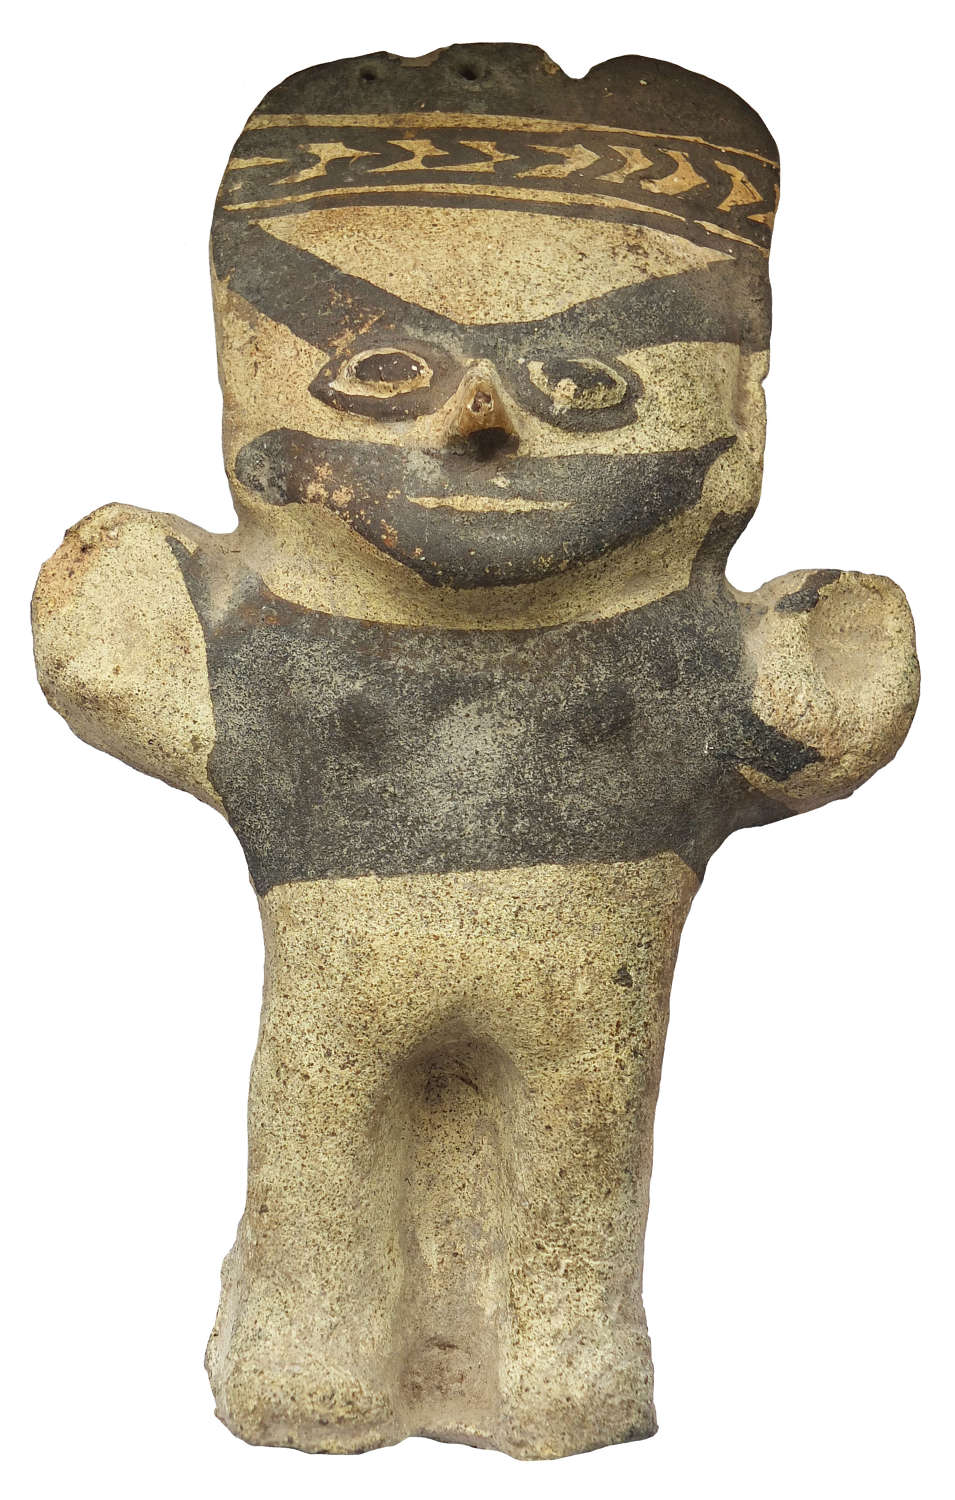 A Chancay standing pottery figure, Peru, c. 1300 A.D.